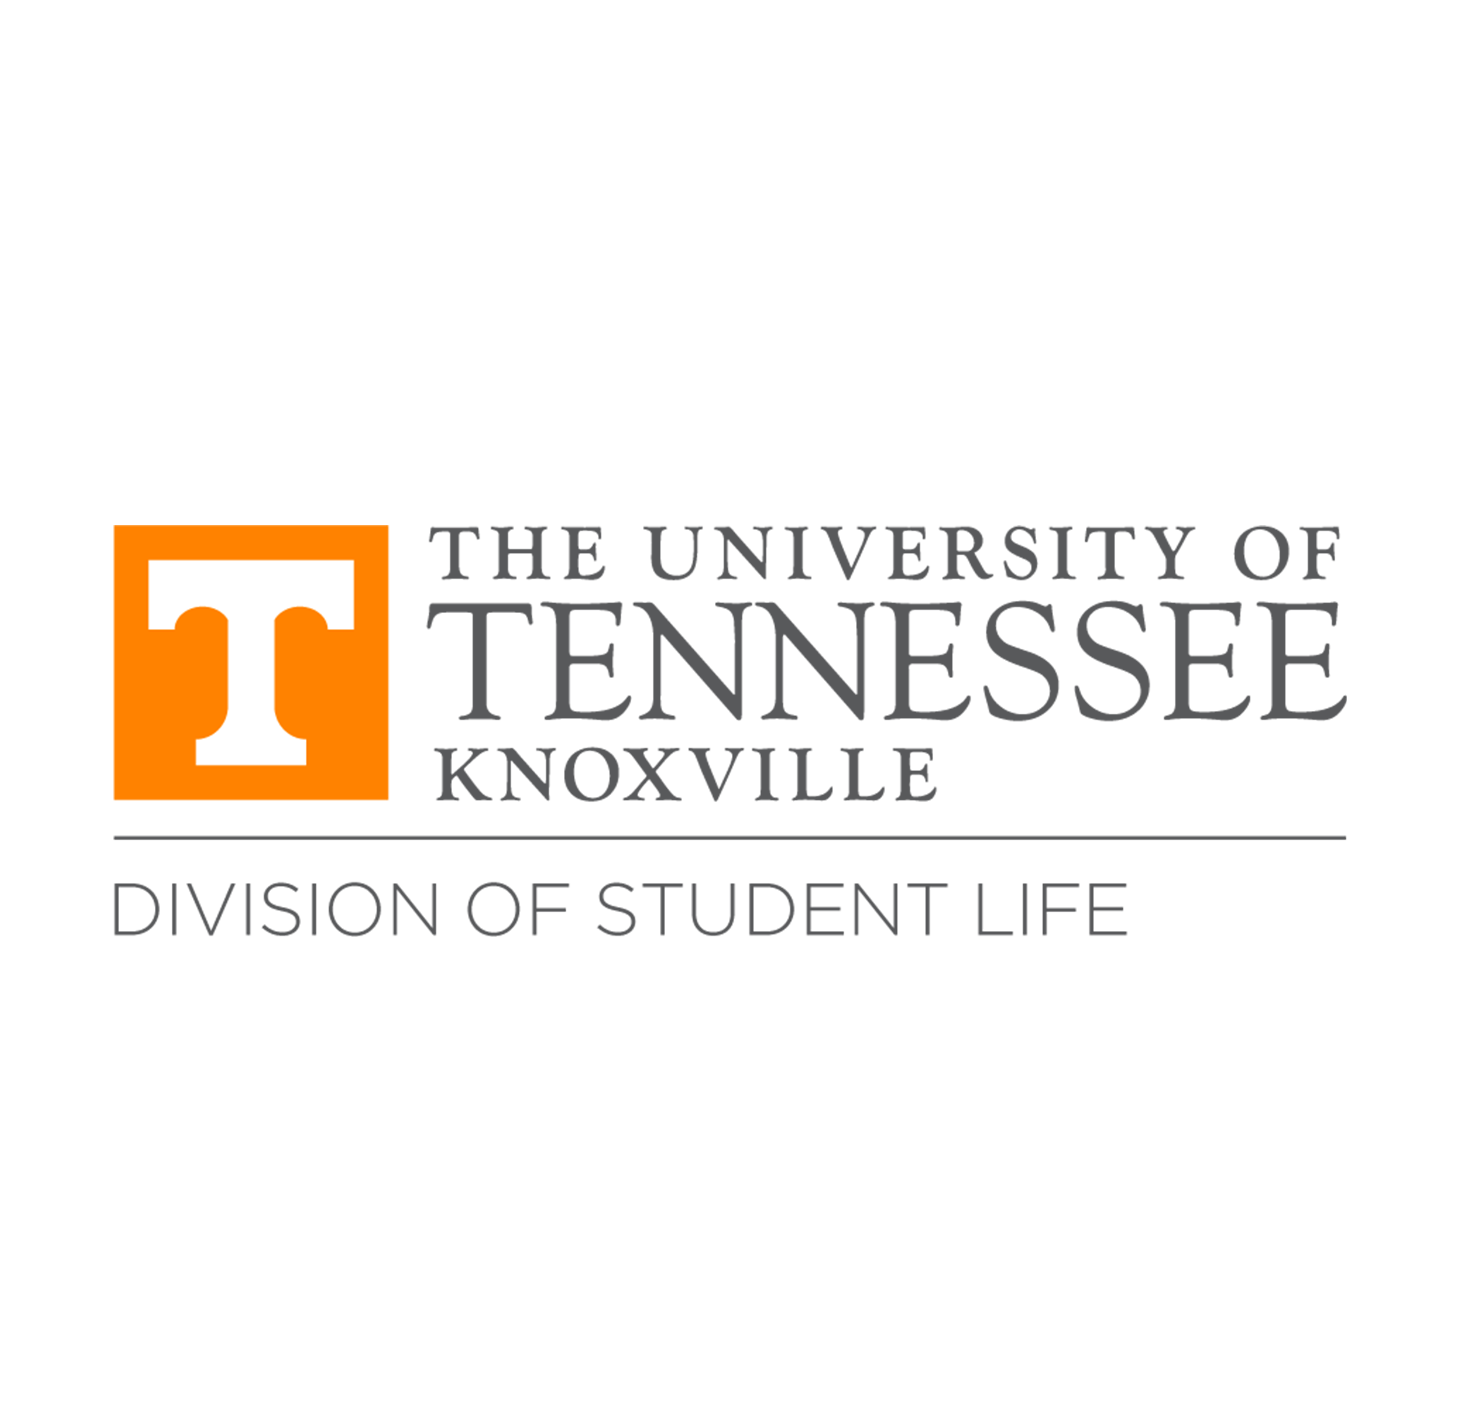 University of Tennessee Branding Campaign – Free Sky Studios